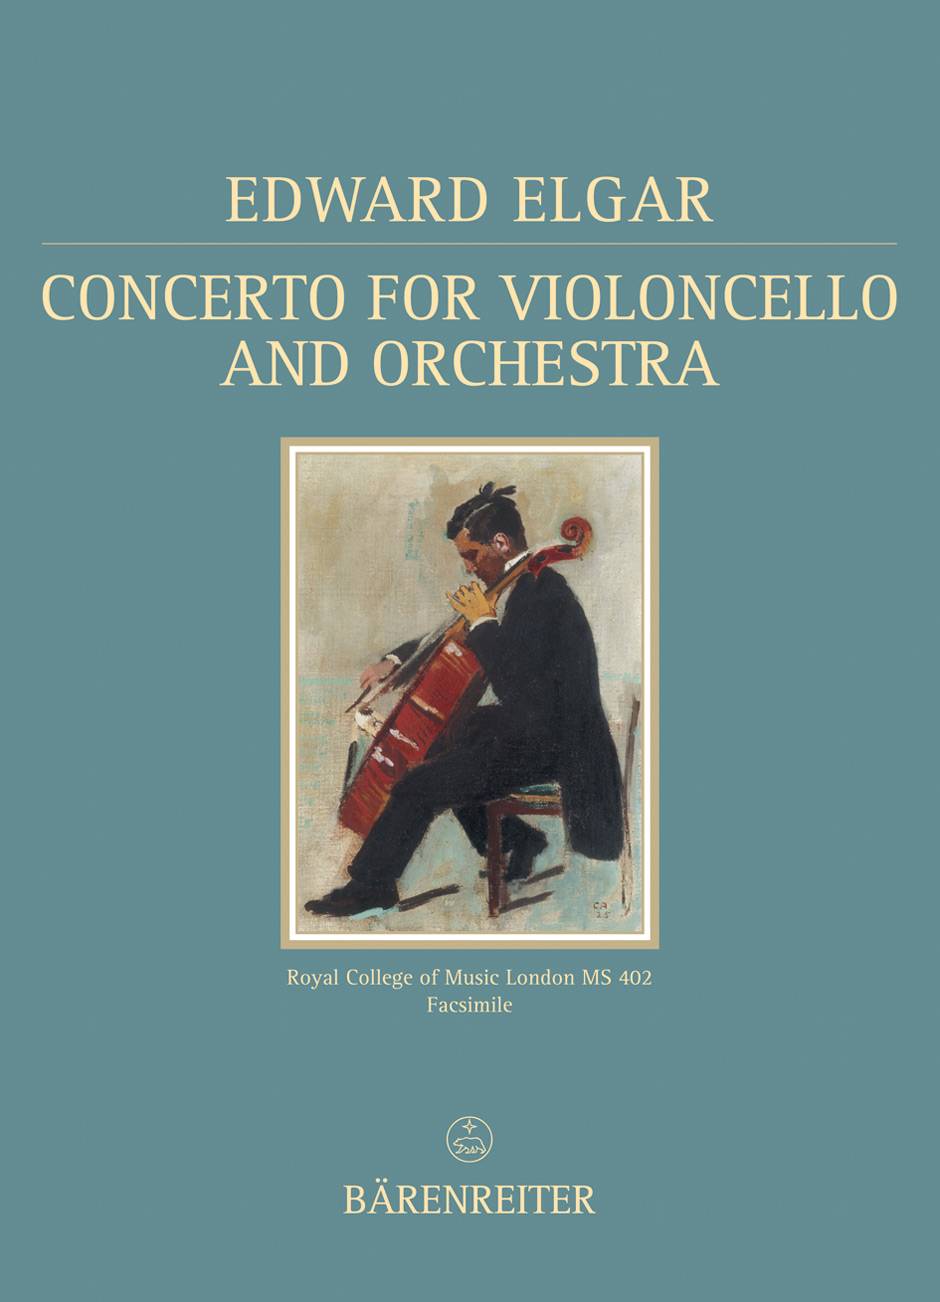 Edward Elgar - Concerto for Violoncello and Orchestra E minor op. 85